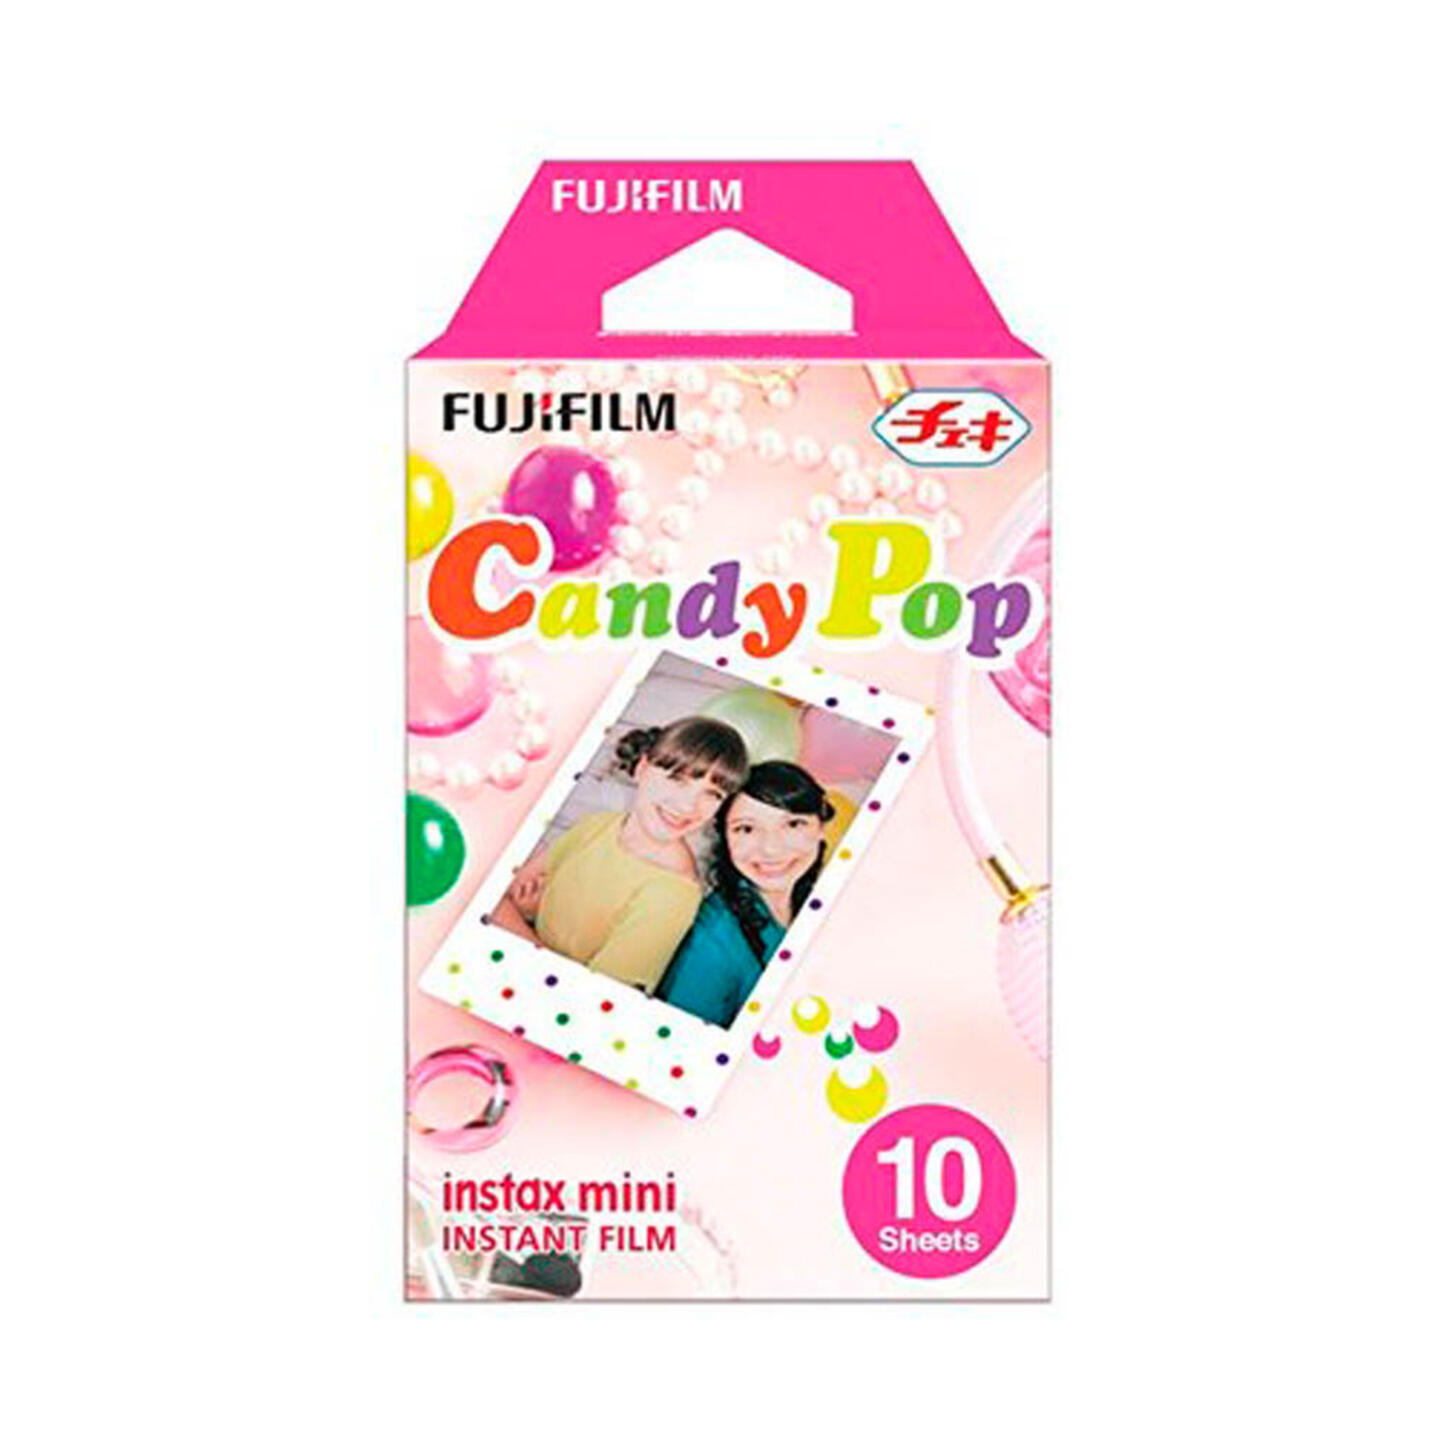 Fujifilm instax mini Sofortbildfilm - Candy Pop - 10 Aufnahmen